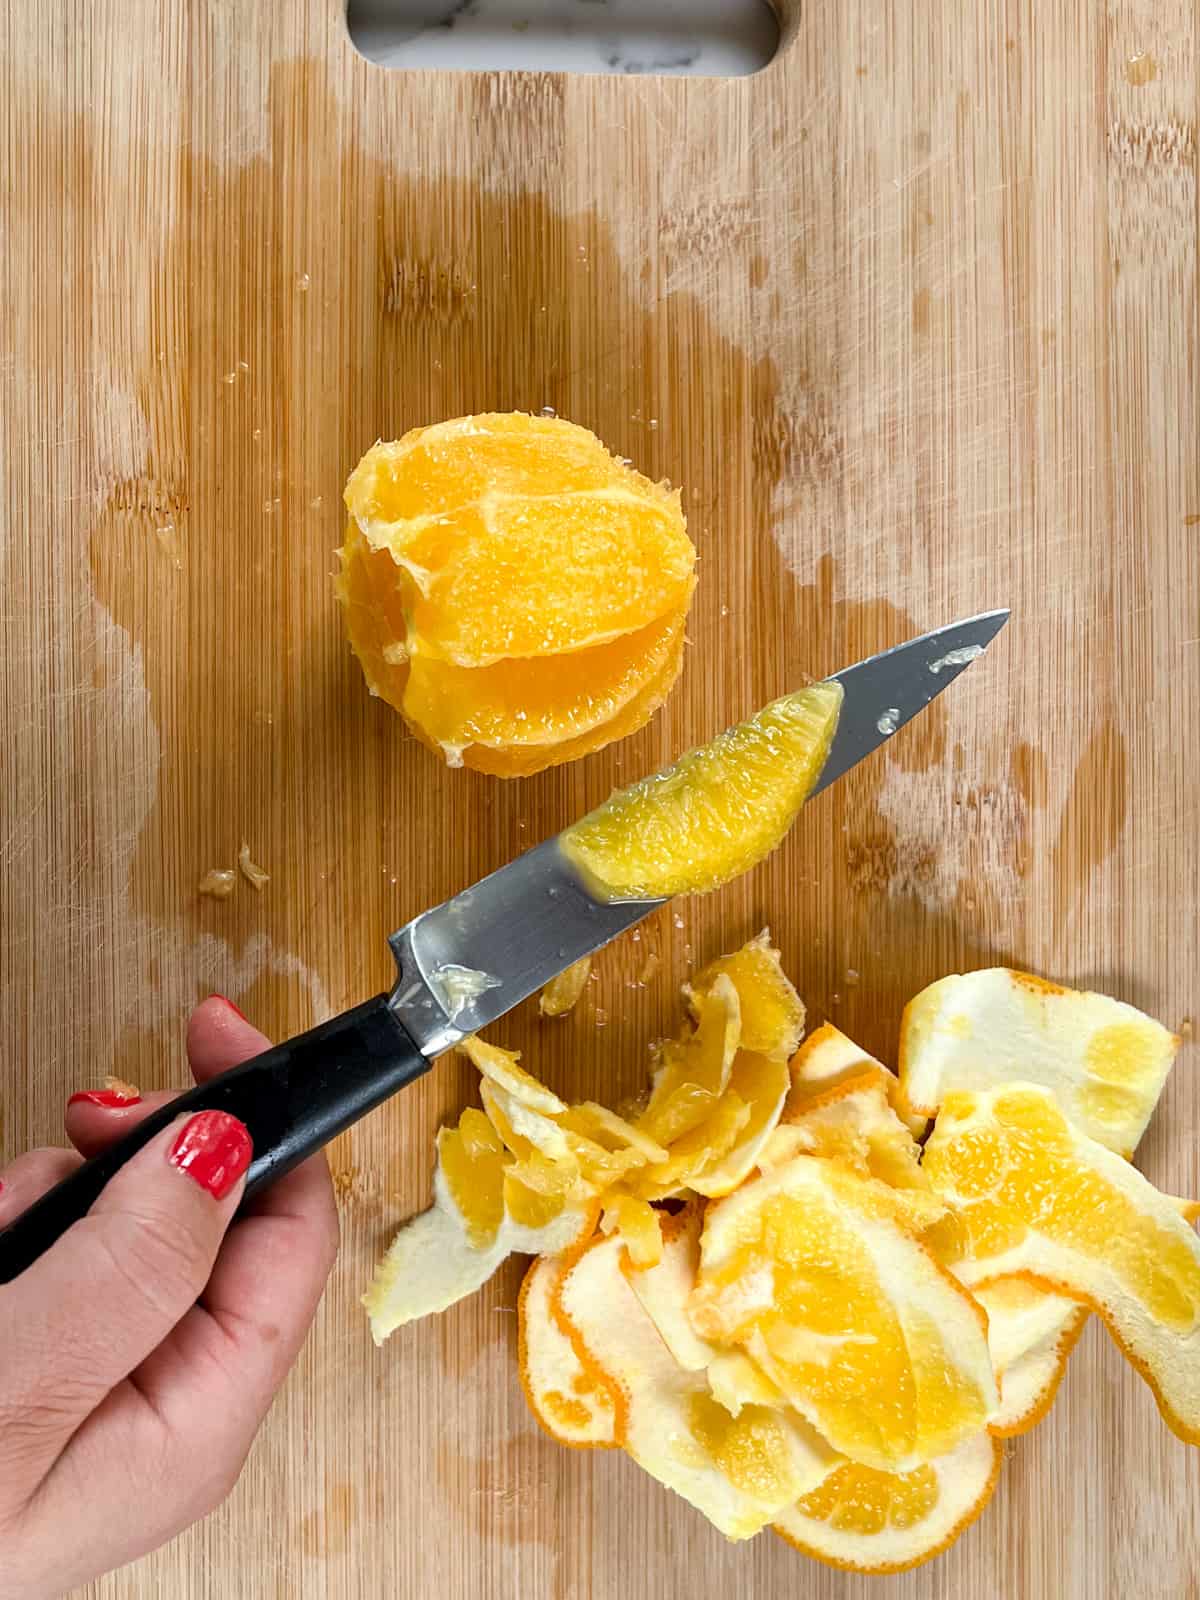 a female hand holding a knife with an orange segment next to a peeled orange